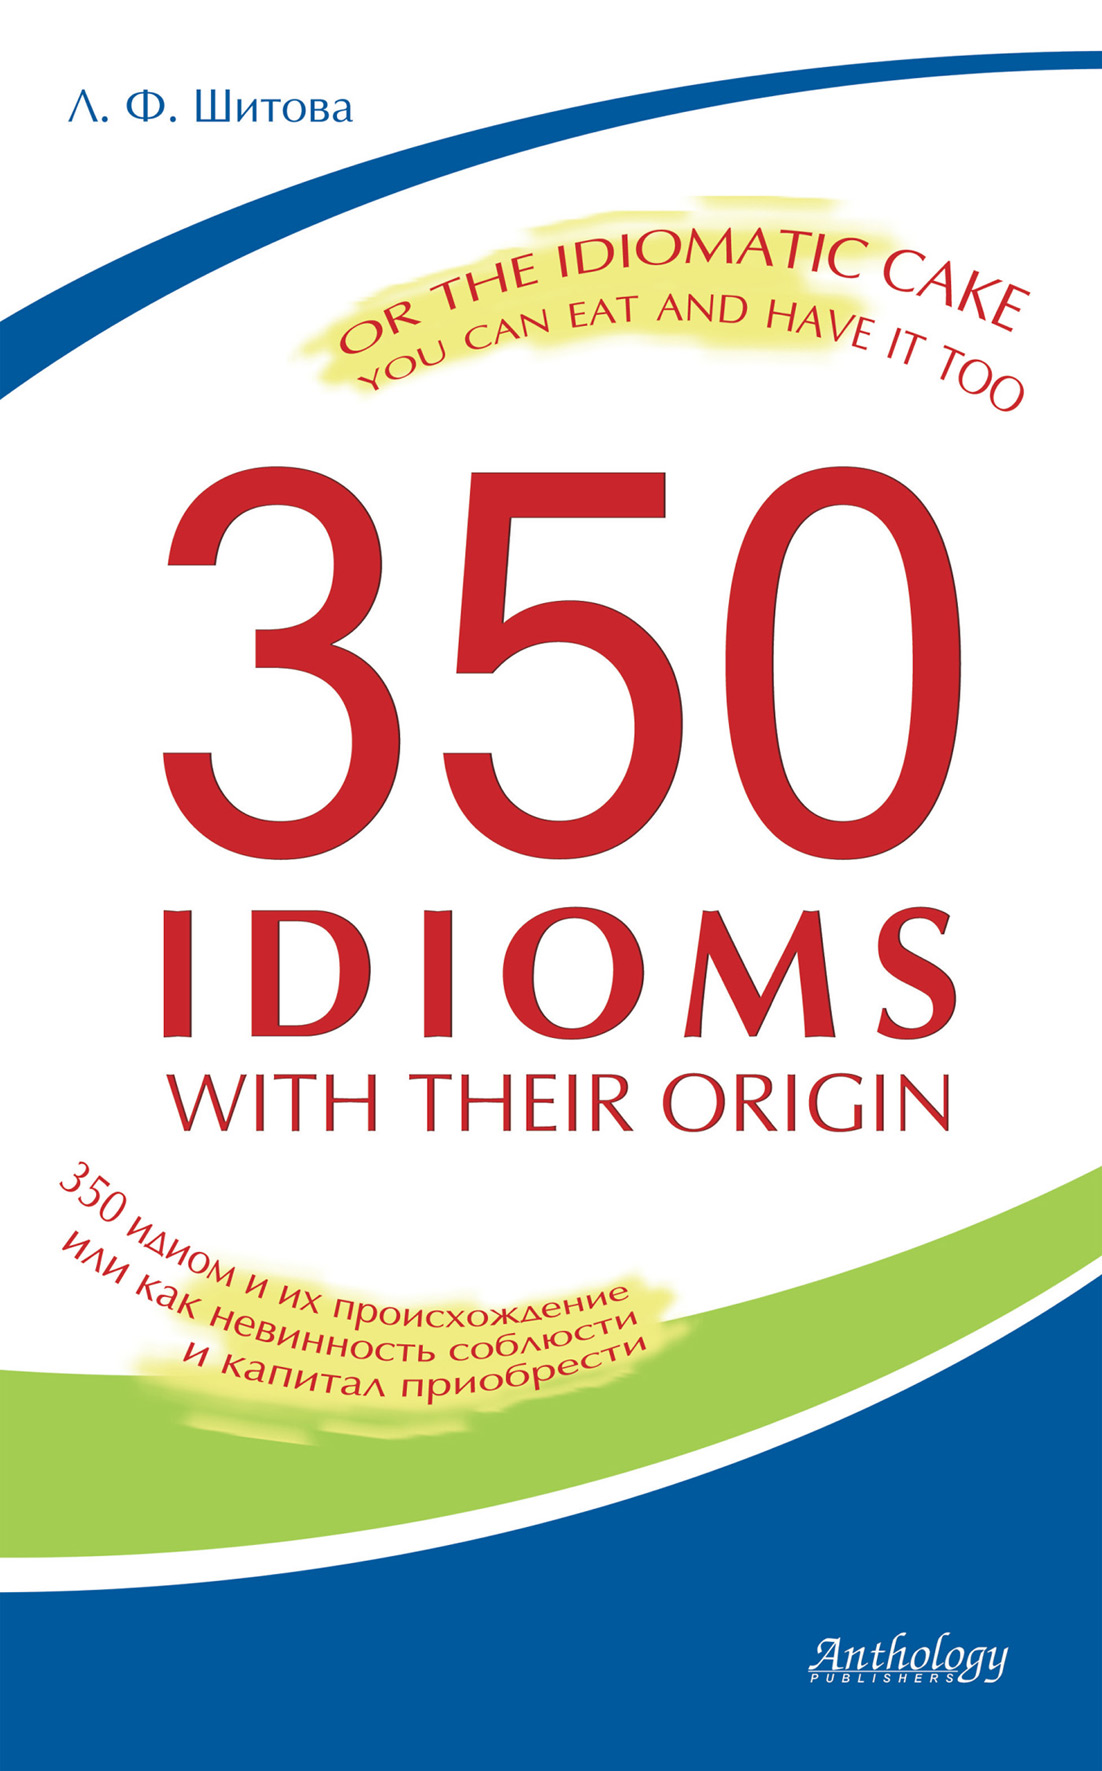 350 Idioms with Their Origin, or The Idiomatic Cake You Can Eat and Have It Too. 350идиом и их происхождение, или как невинность соблюсти и капитал приобрести